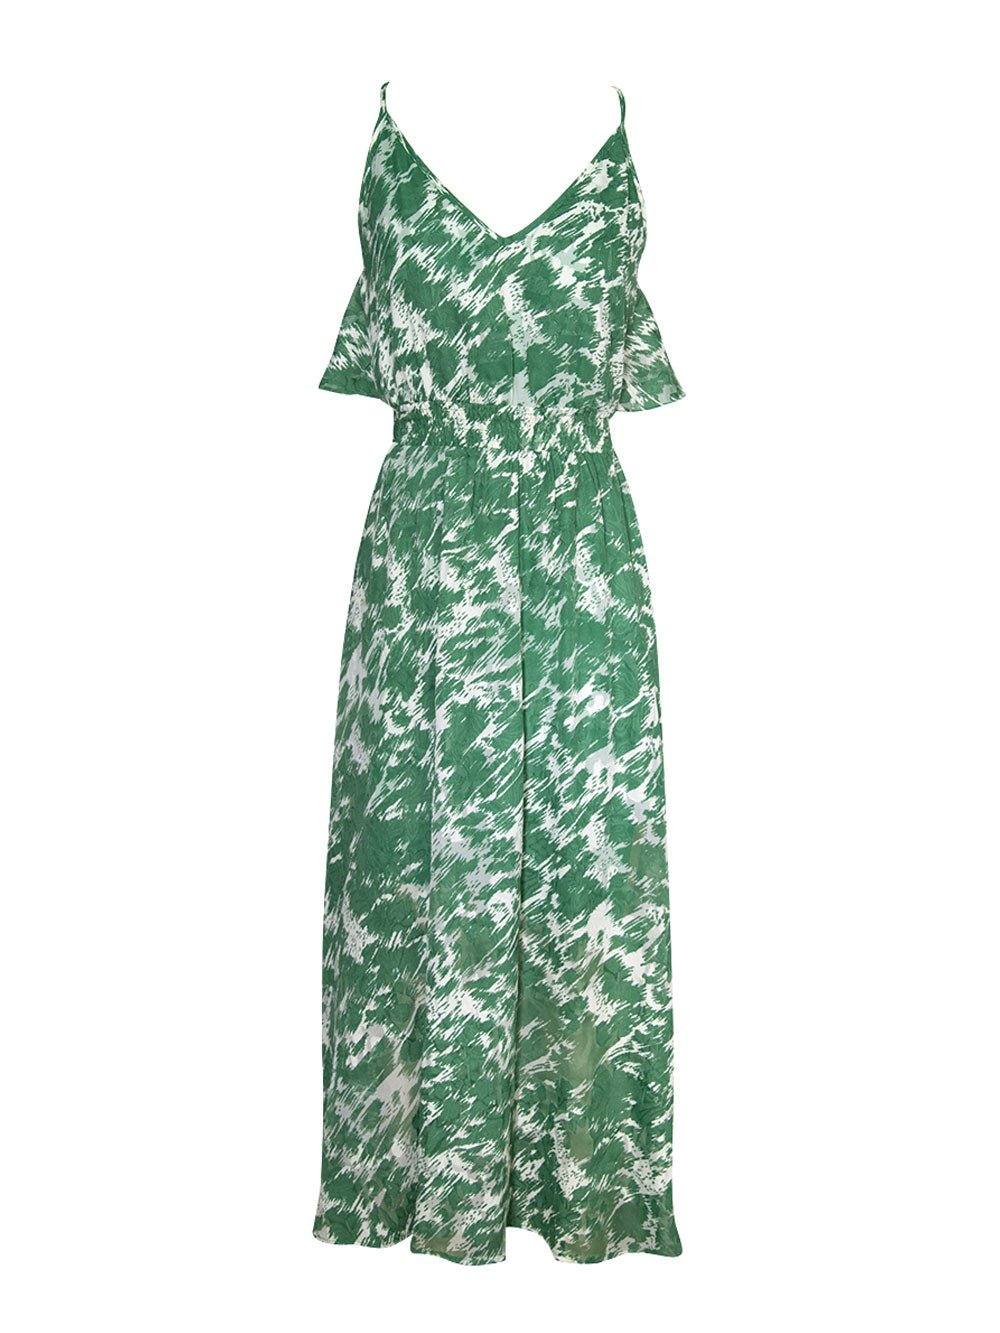 Scoop Neck Backless Dress - Green Floral Prints - OCEAN MYSTERY